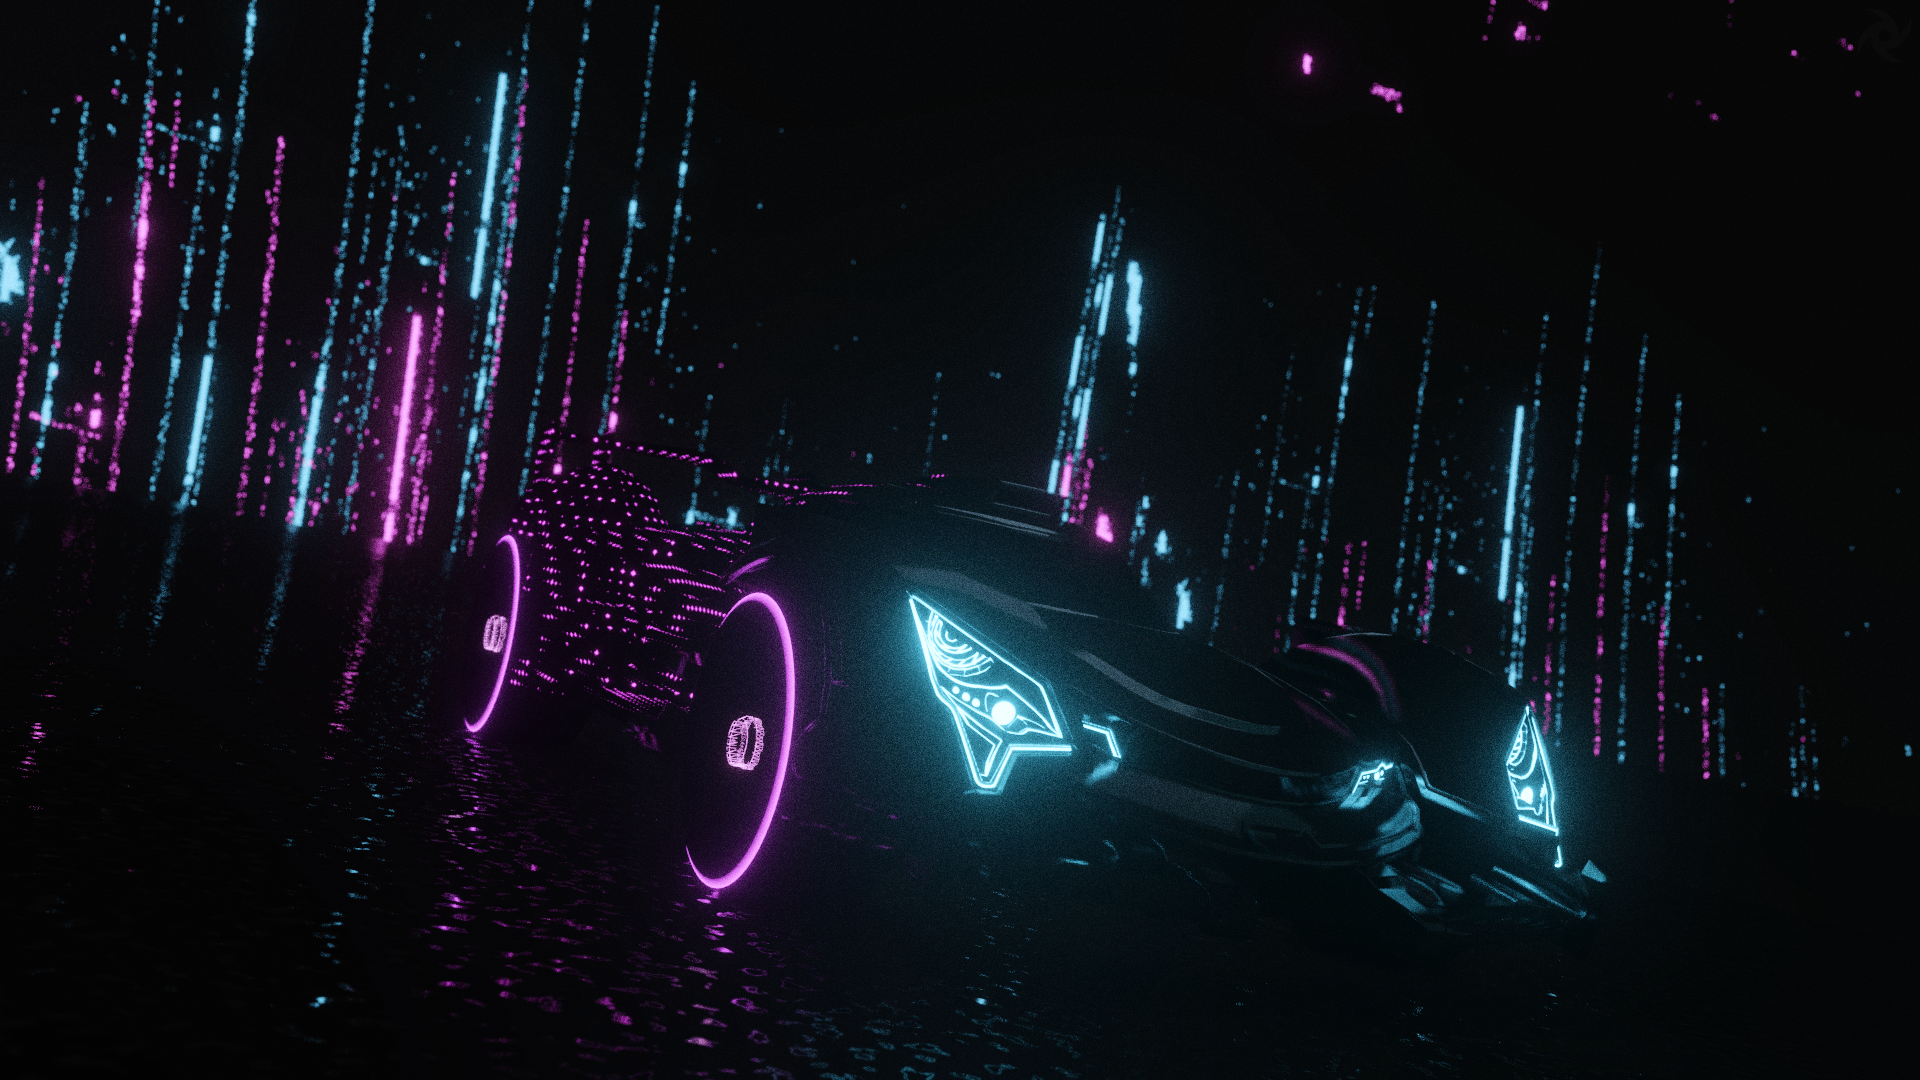 Centio neon mod, GlowEngine 2.0+ var decal